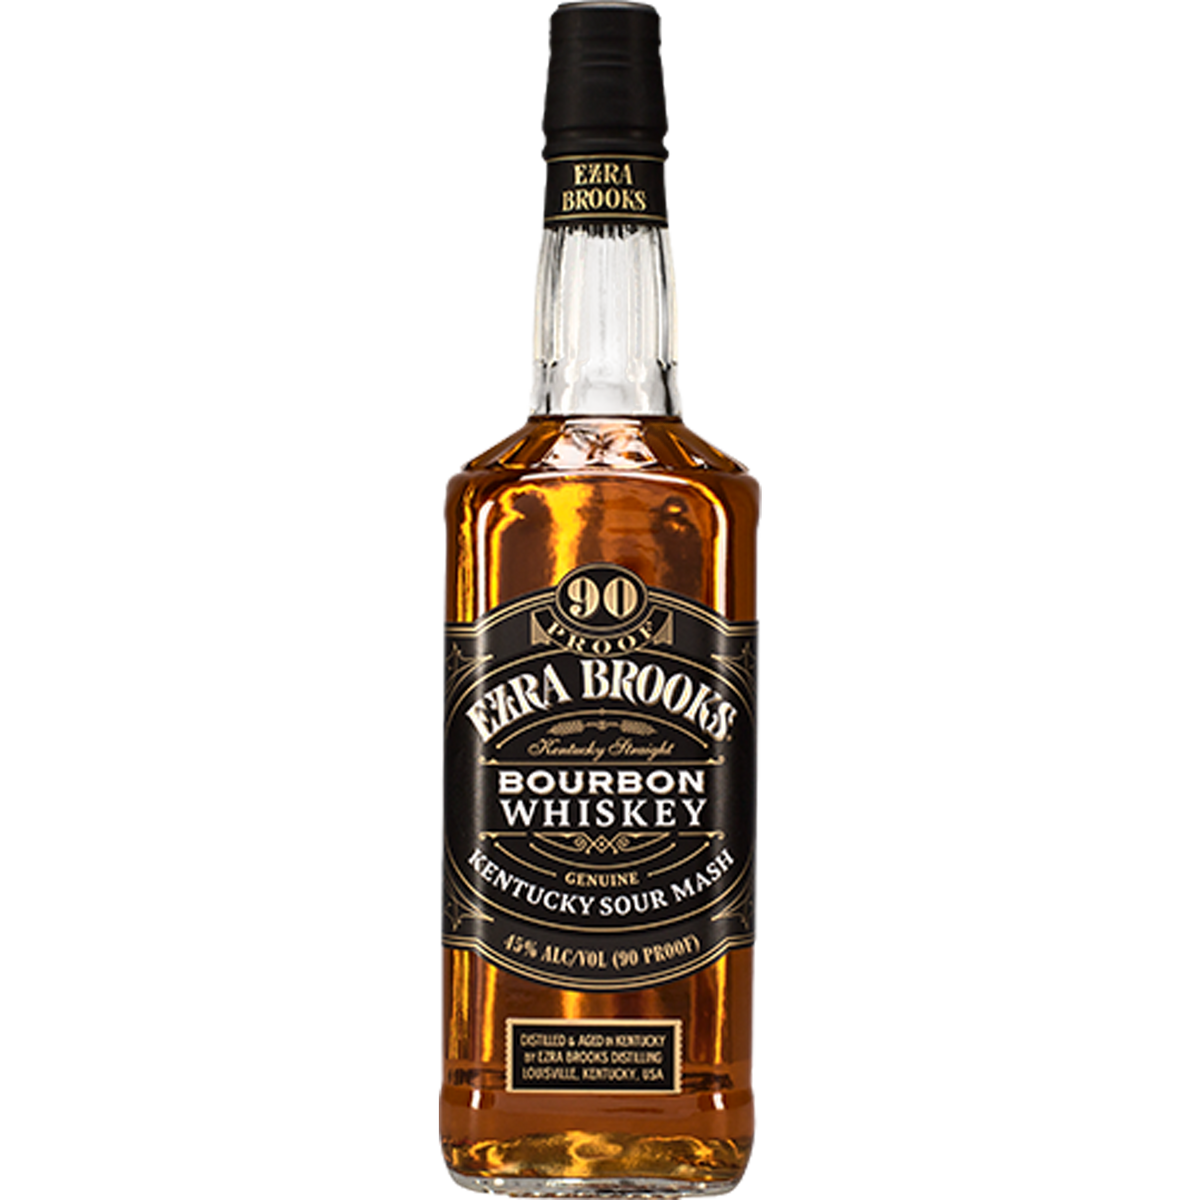 Southern Comfort Original Whiskey, 750ml Liquor, 35% Alcohol